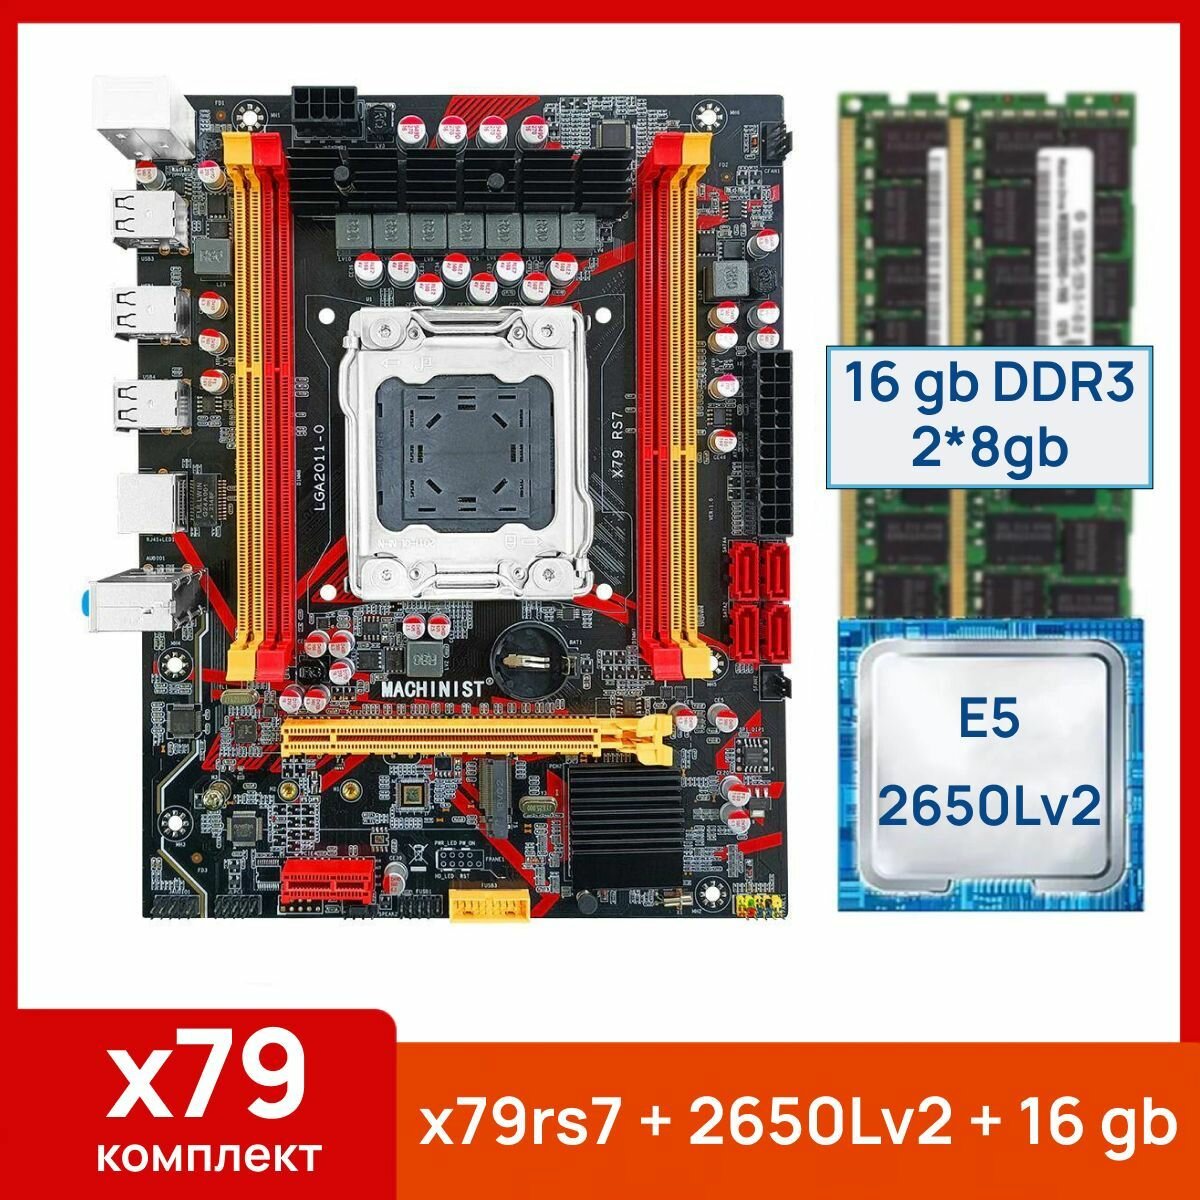 Комплект: Материнская плата Machinist RS-7 + Процессор Xeon E5 2650Lv2 + 16 gb(2x8gb) DDR3 серверная